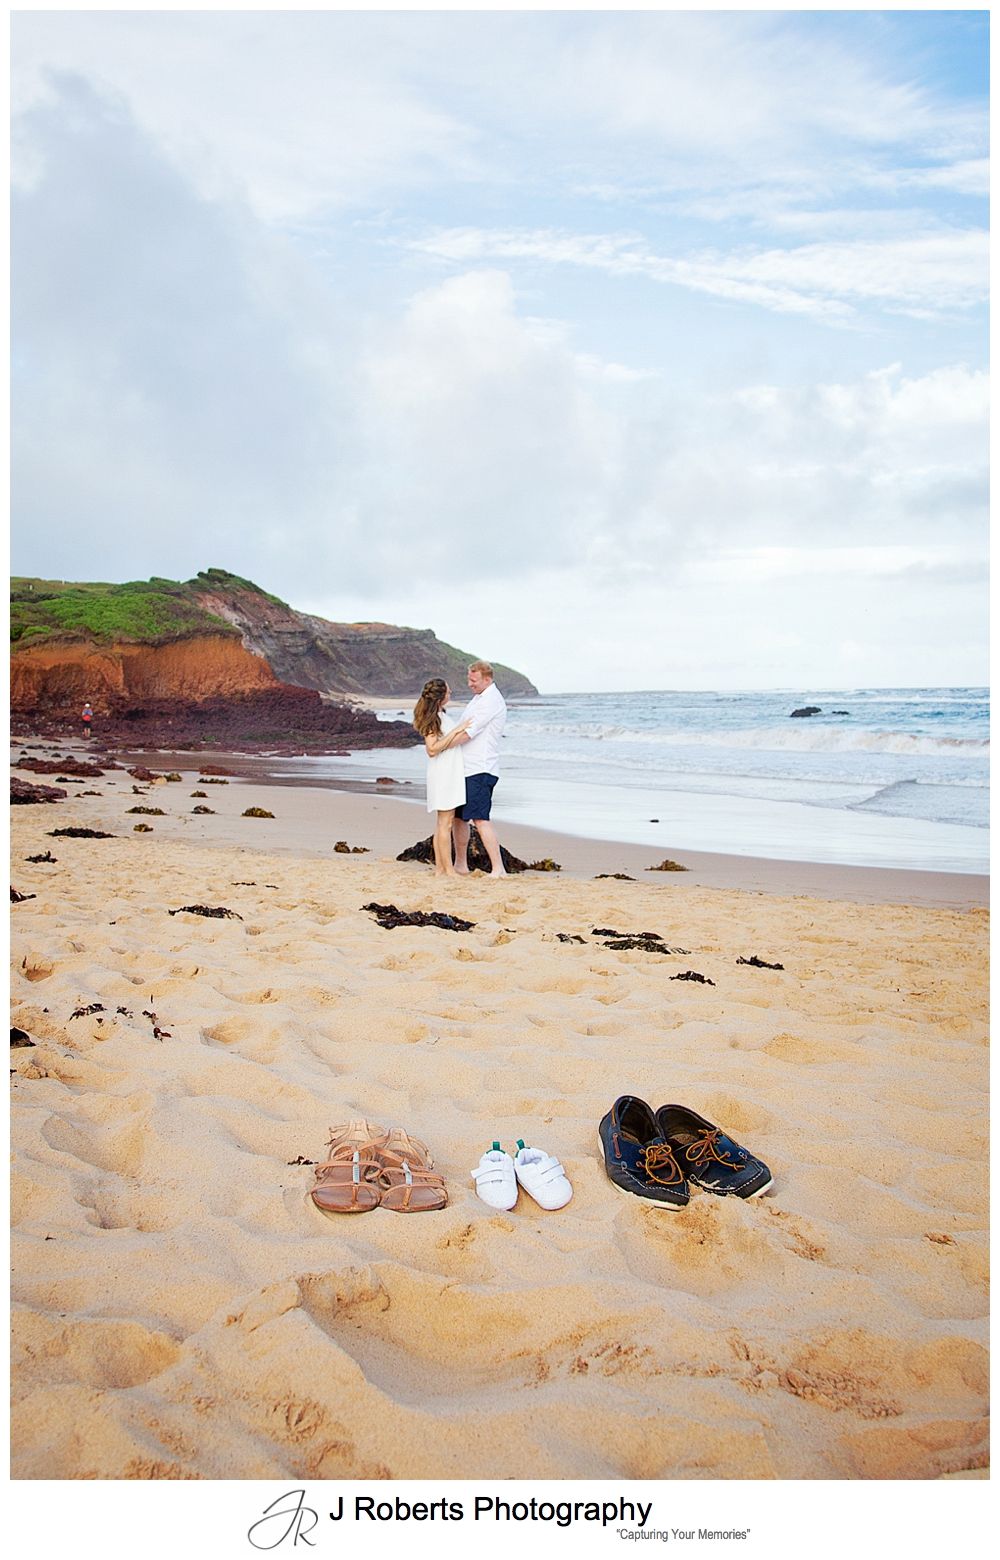 Pregnancy Announcement Portrait Photography at Long Reef Beach Sydney